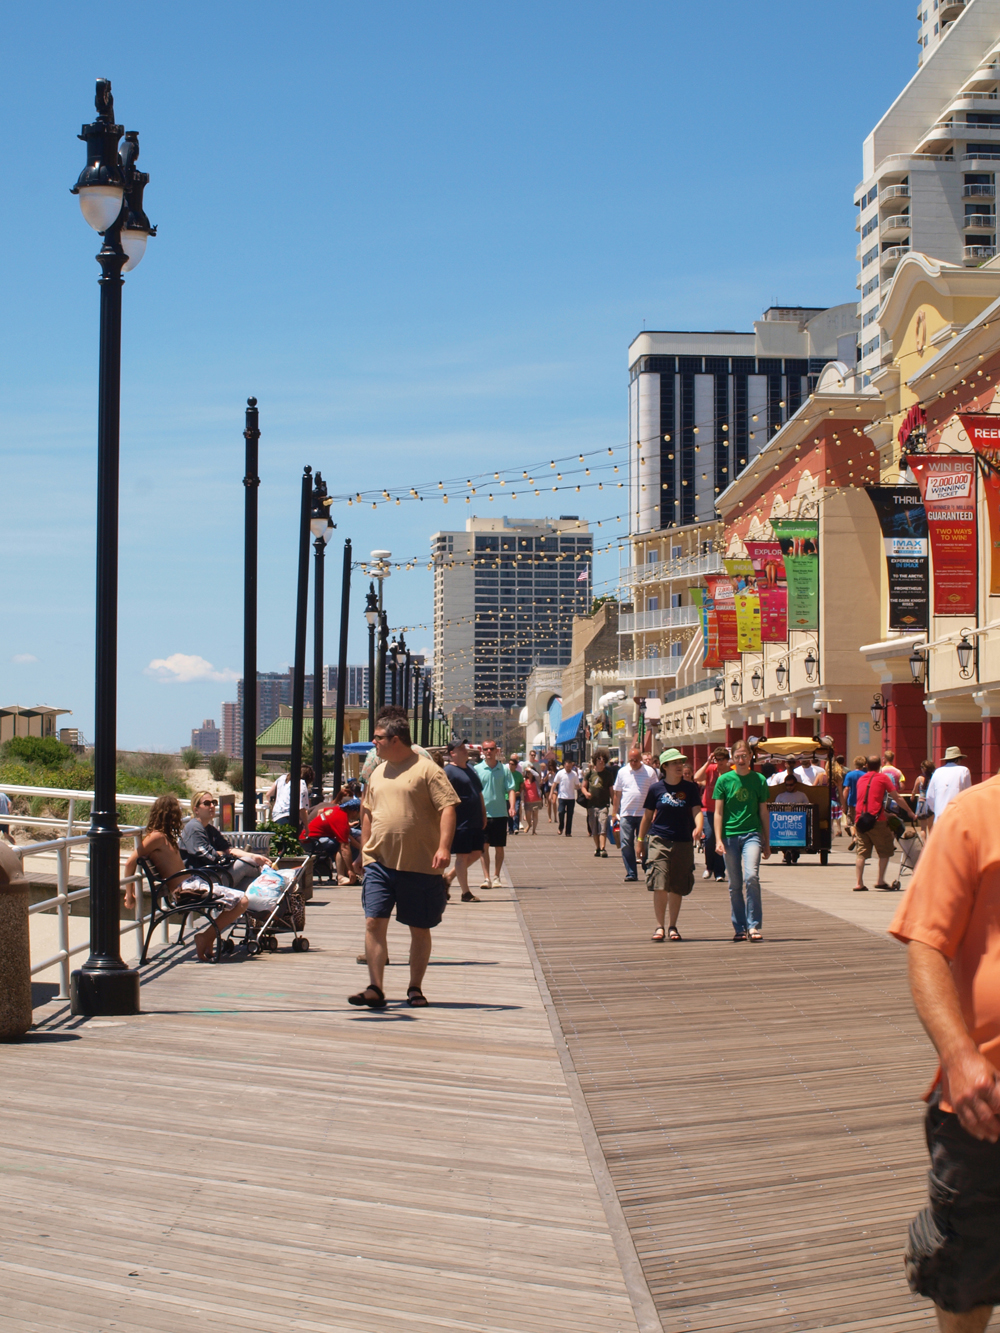 Atlantic City boardwalk by the Tropicana